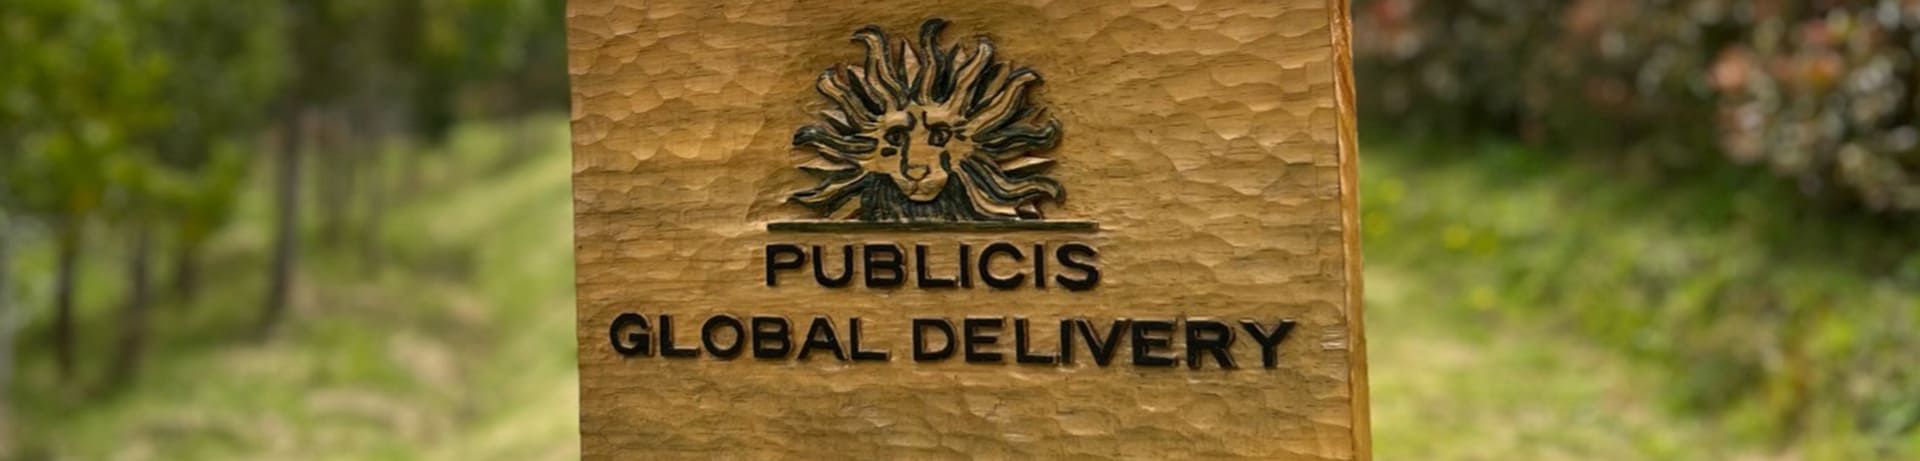 Publicis Global Delivery - Fundamental Skills Development